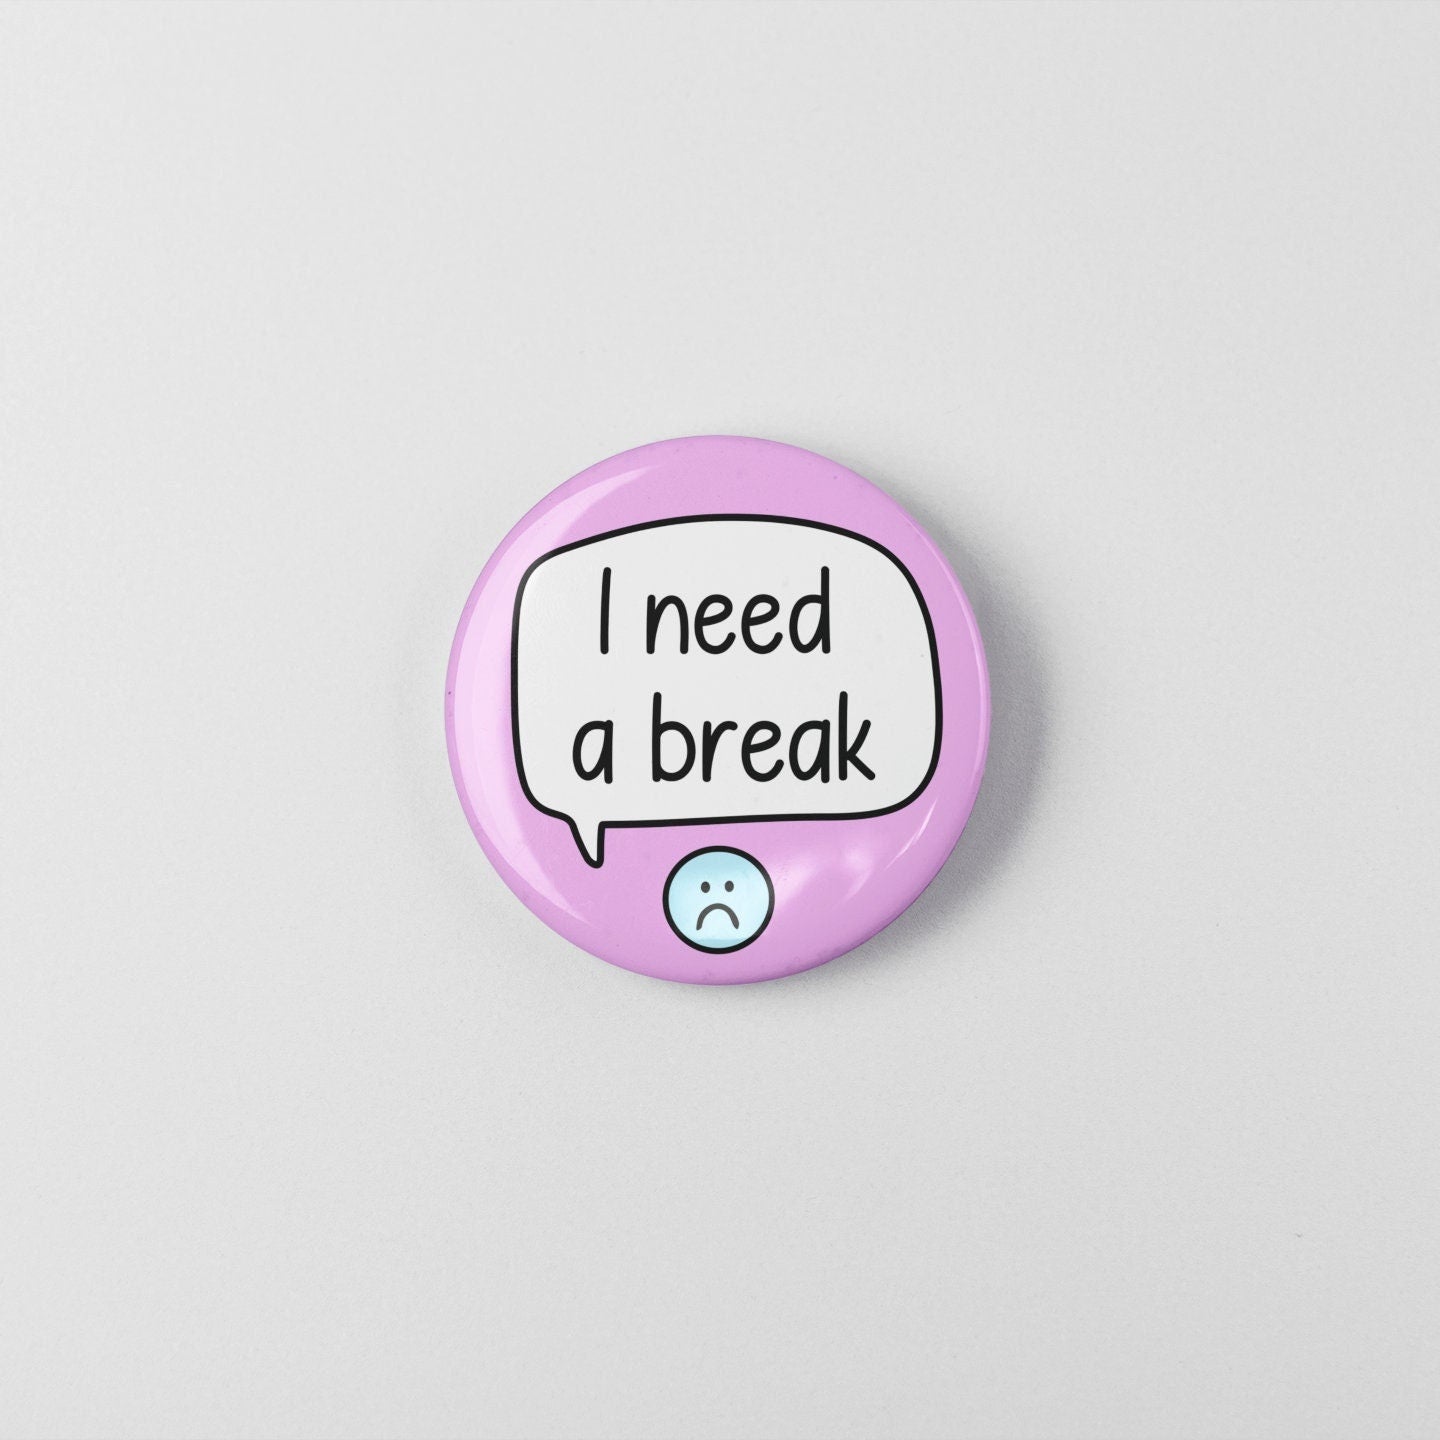 I Need A Break - Badge Pin | Communication Button Badge - Disability Awareness Pin